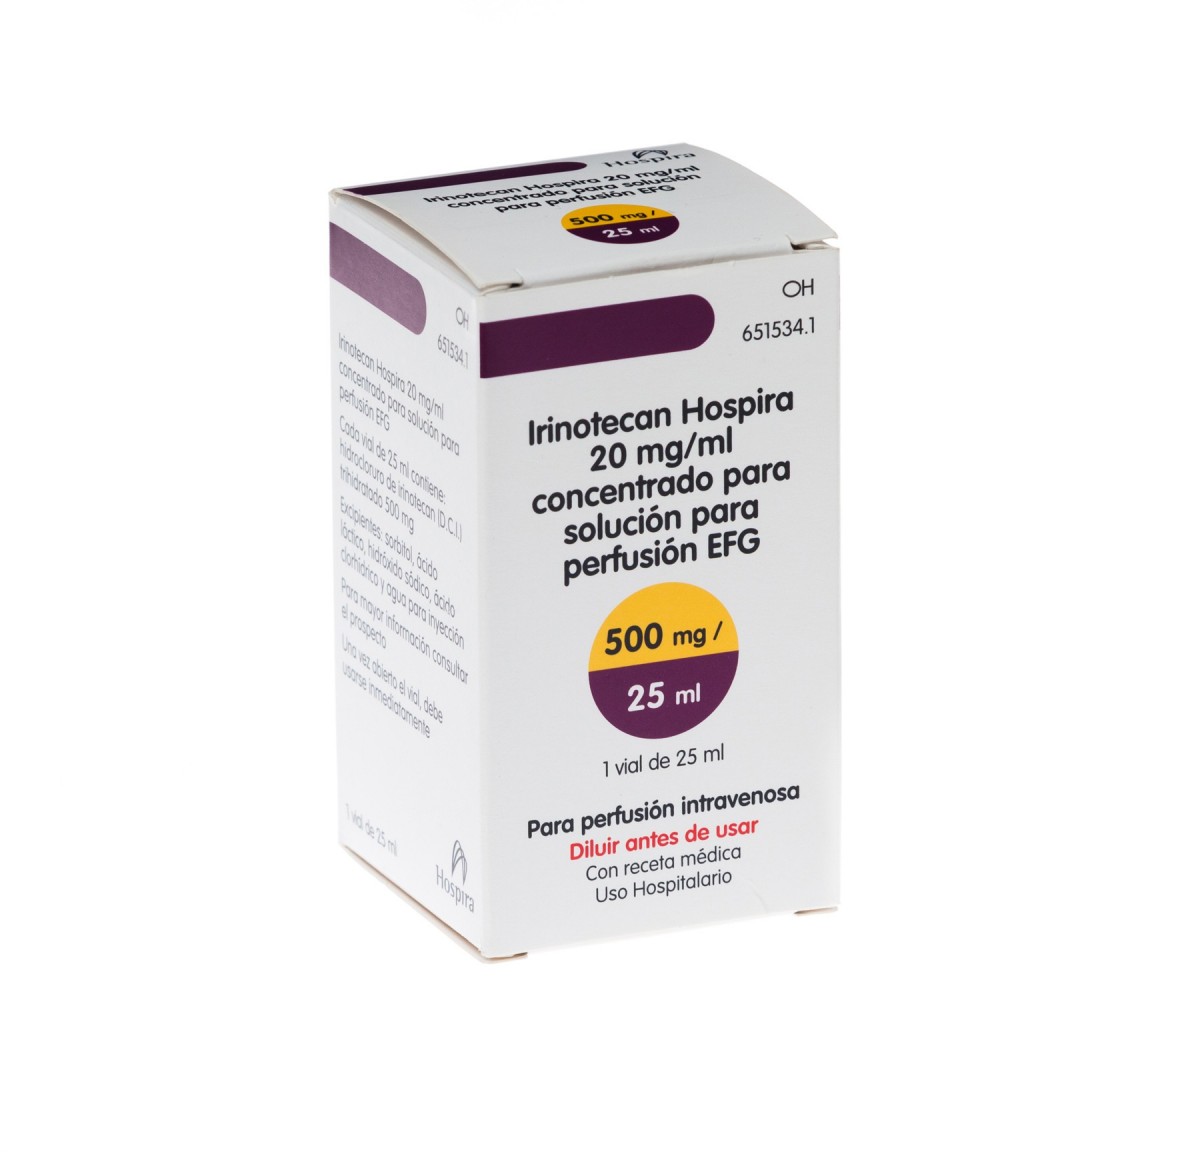 IRINOTECAN HOSPIRA 20 mg/ml CONCENTRADO PARA SOLUCION PARA  PERFUSION EFG , 1 vial de 25 ml fotografía del envase.